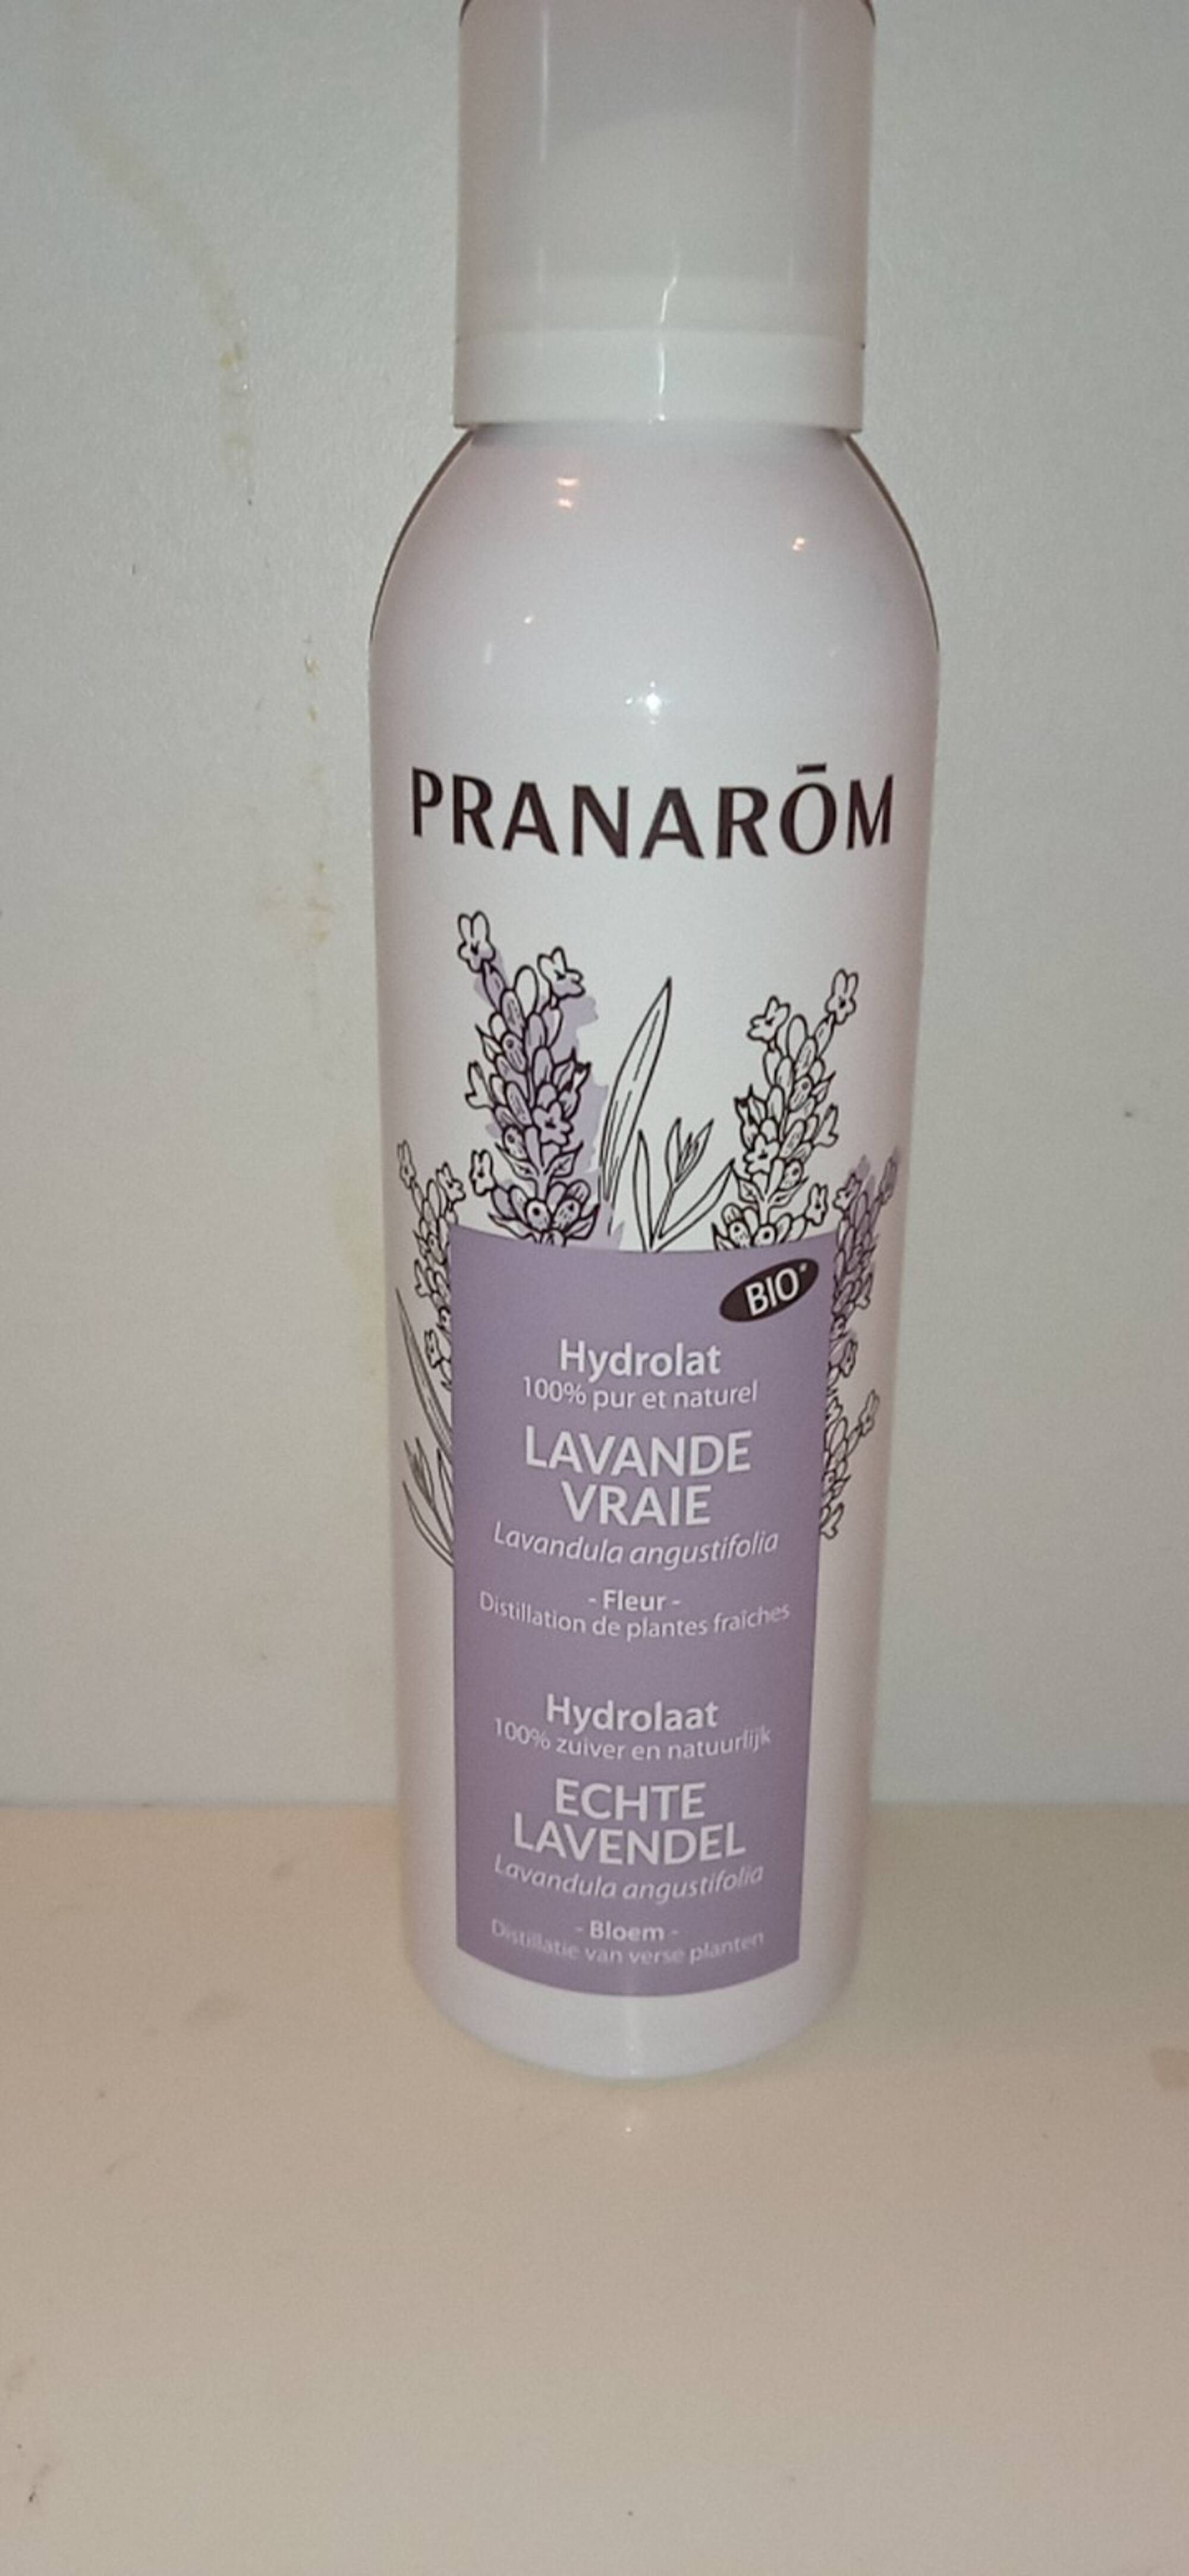 Lavande vraie Bio (Lavandula angustifolia) - Pranarôm.